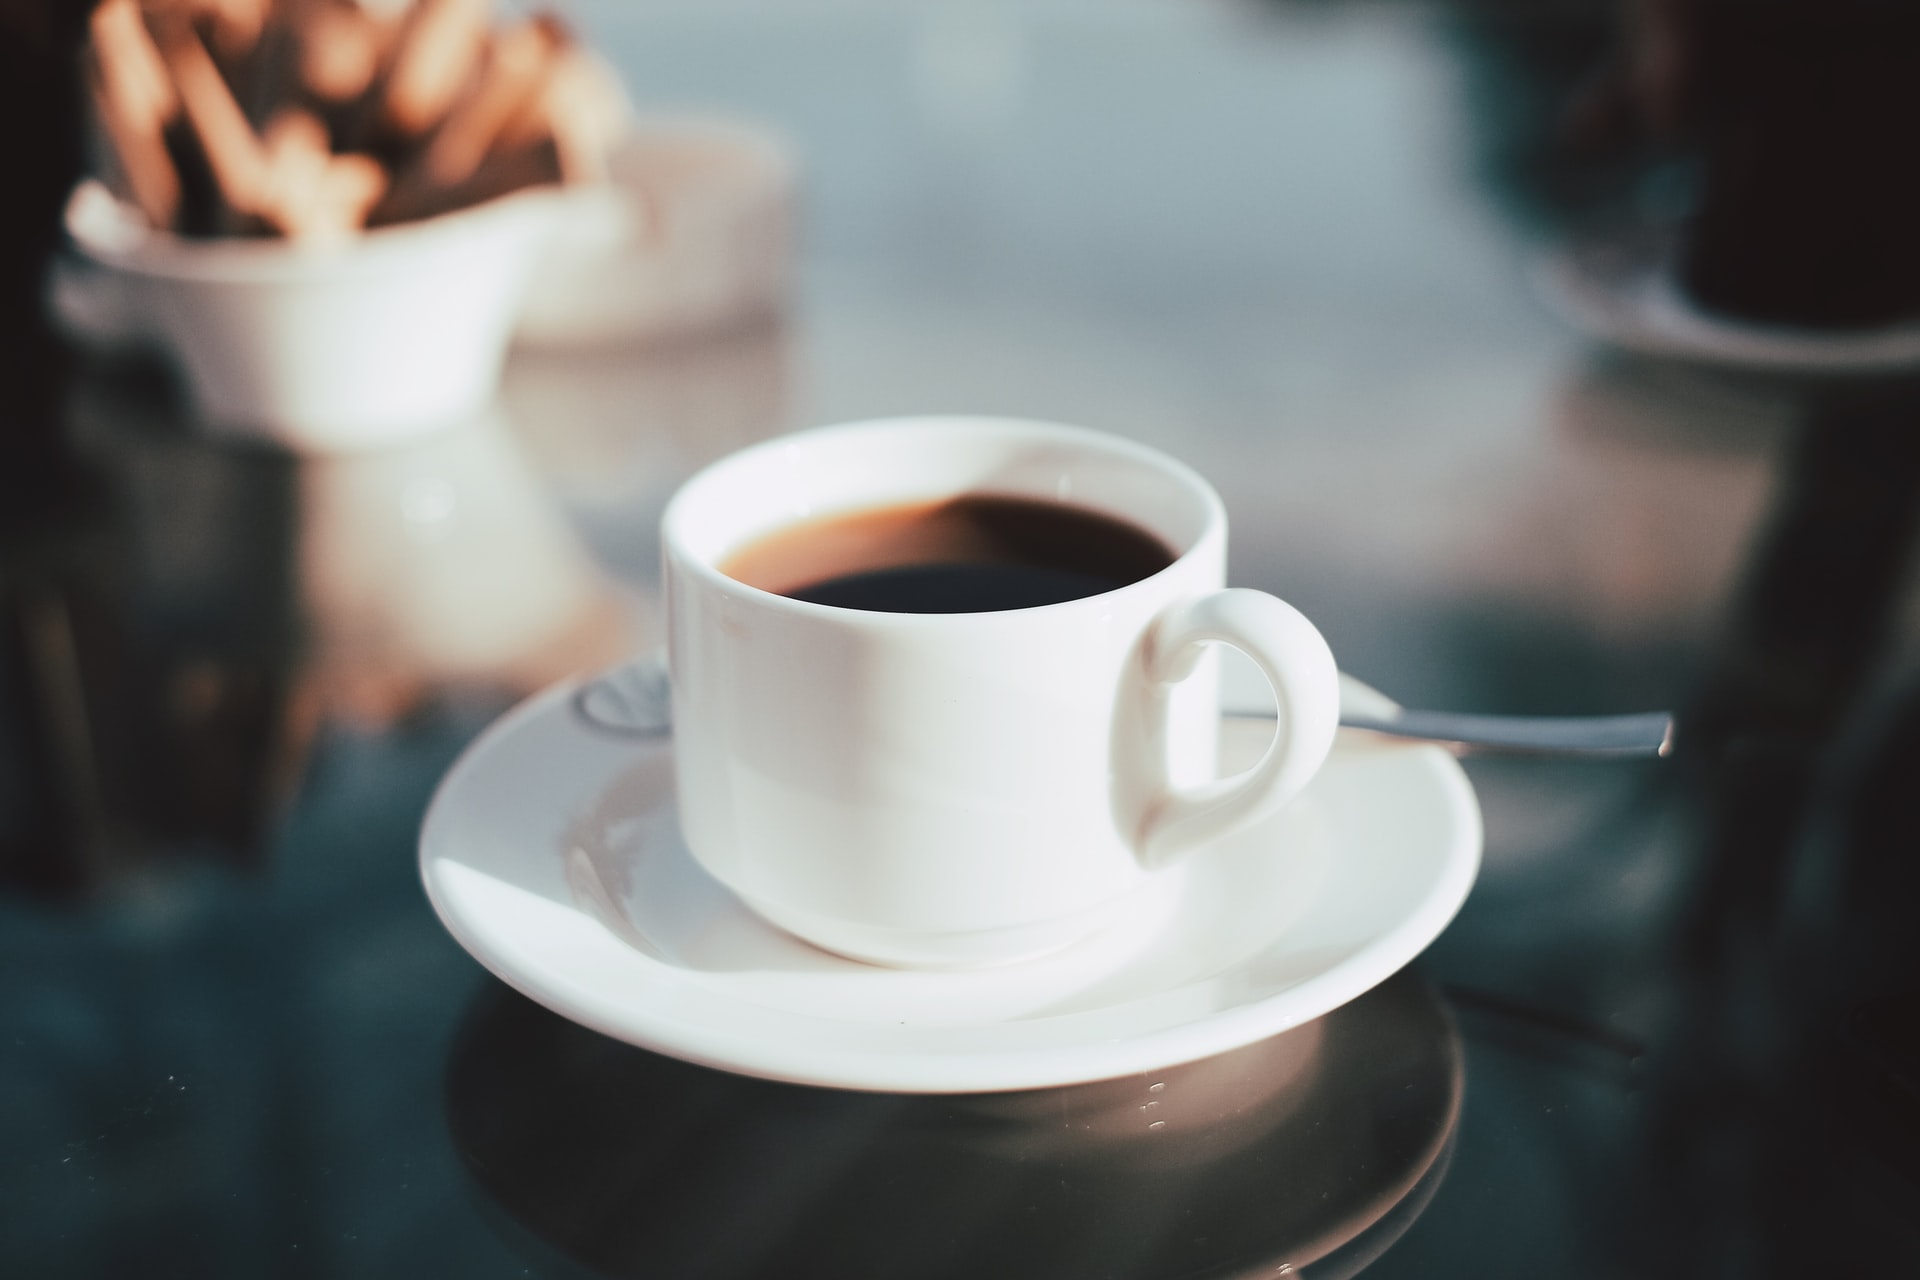 Valor de 500g de café chega a R$ 15 nos mercados; por que valor subiu tanto?